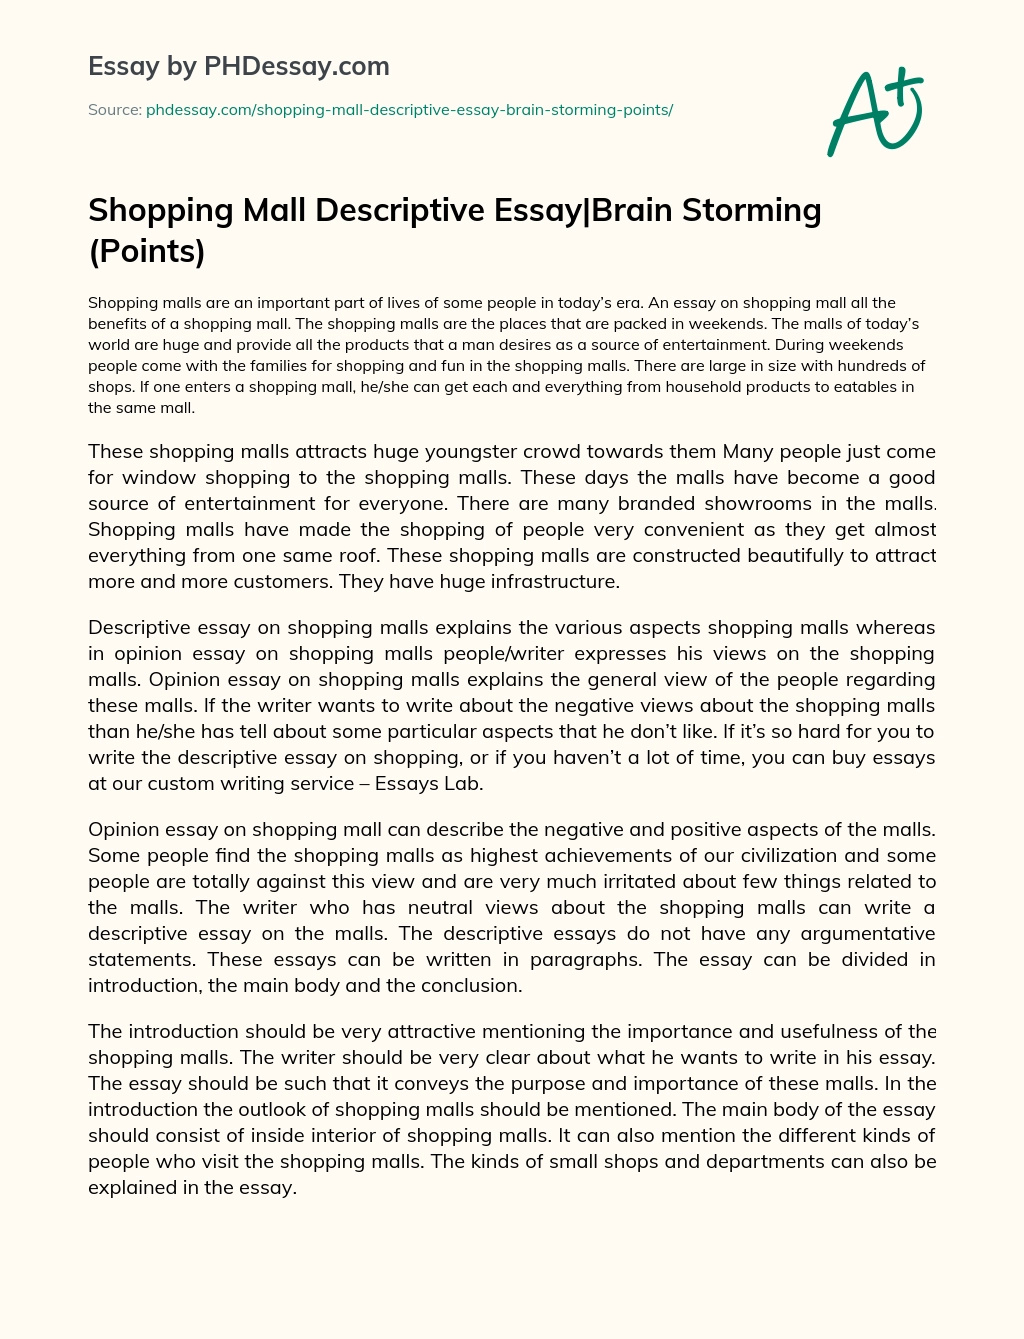 Shopping Mall Descriptive Essay|Brain Storming (Points) essay